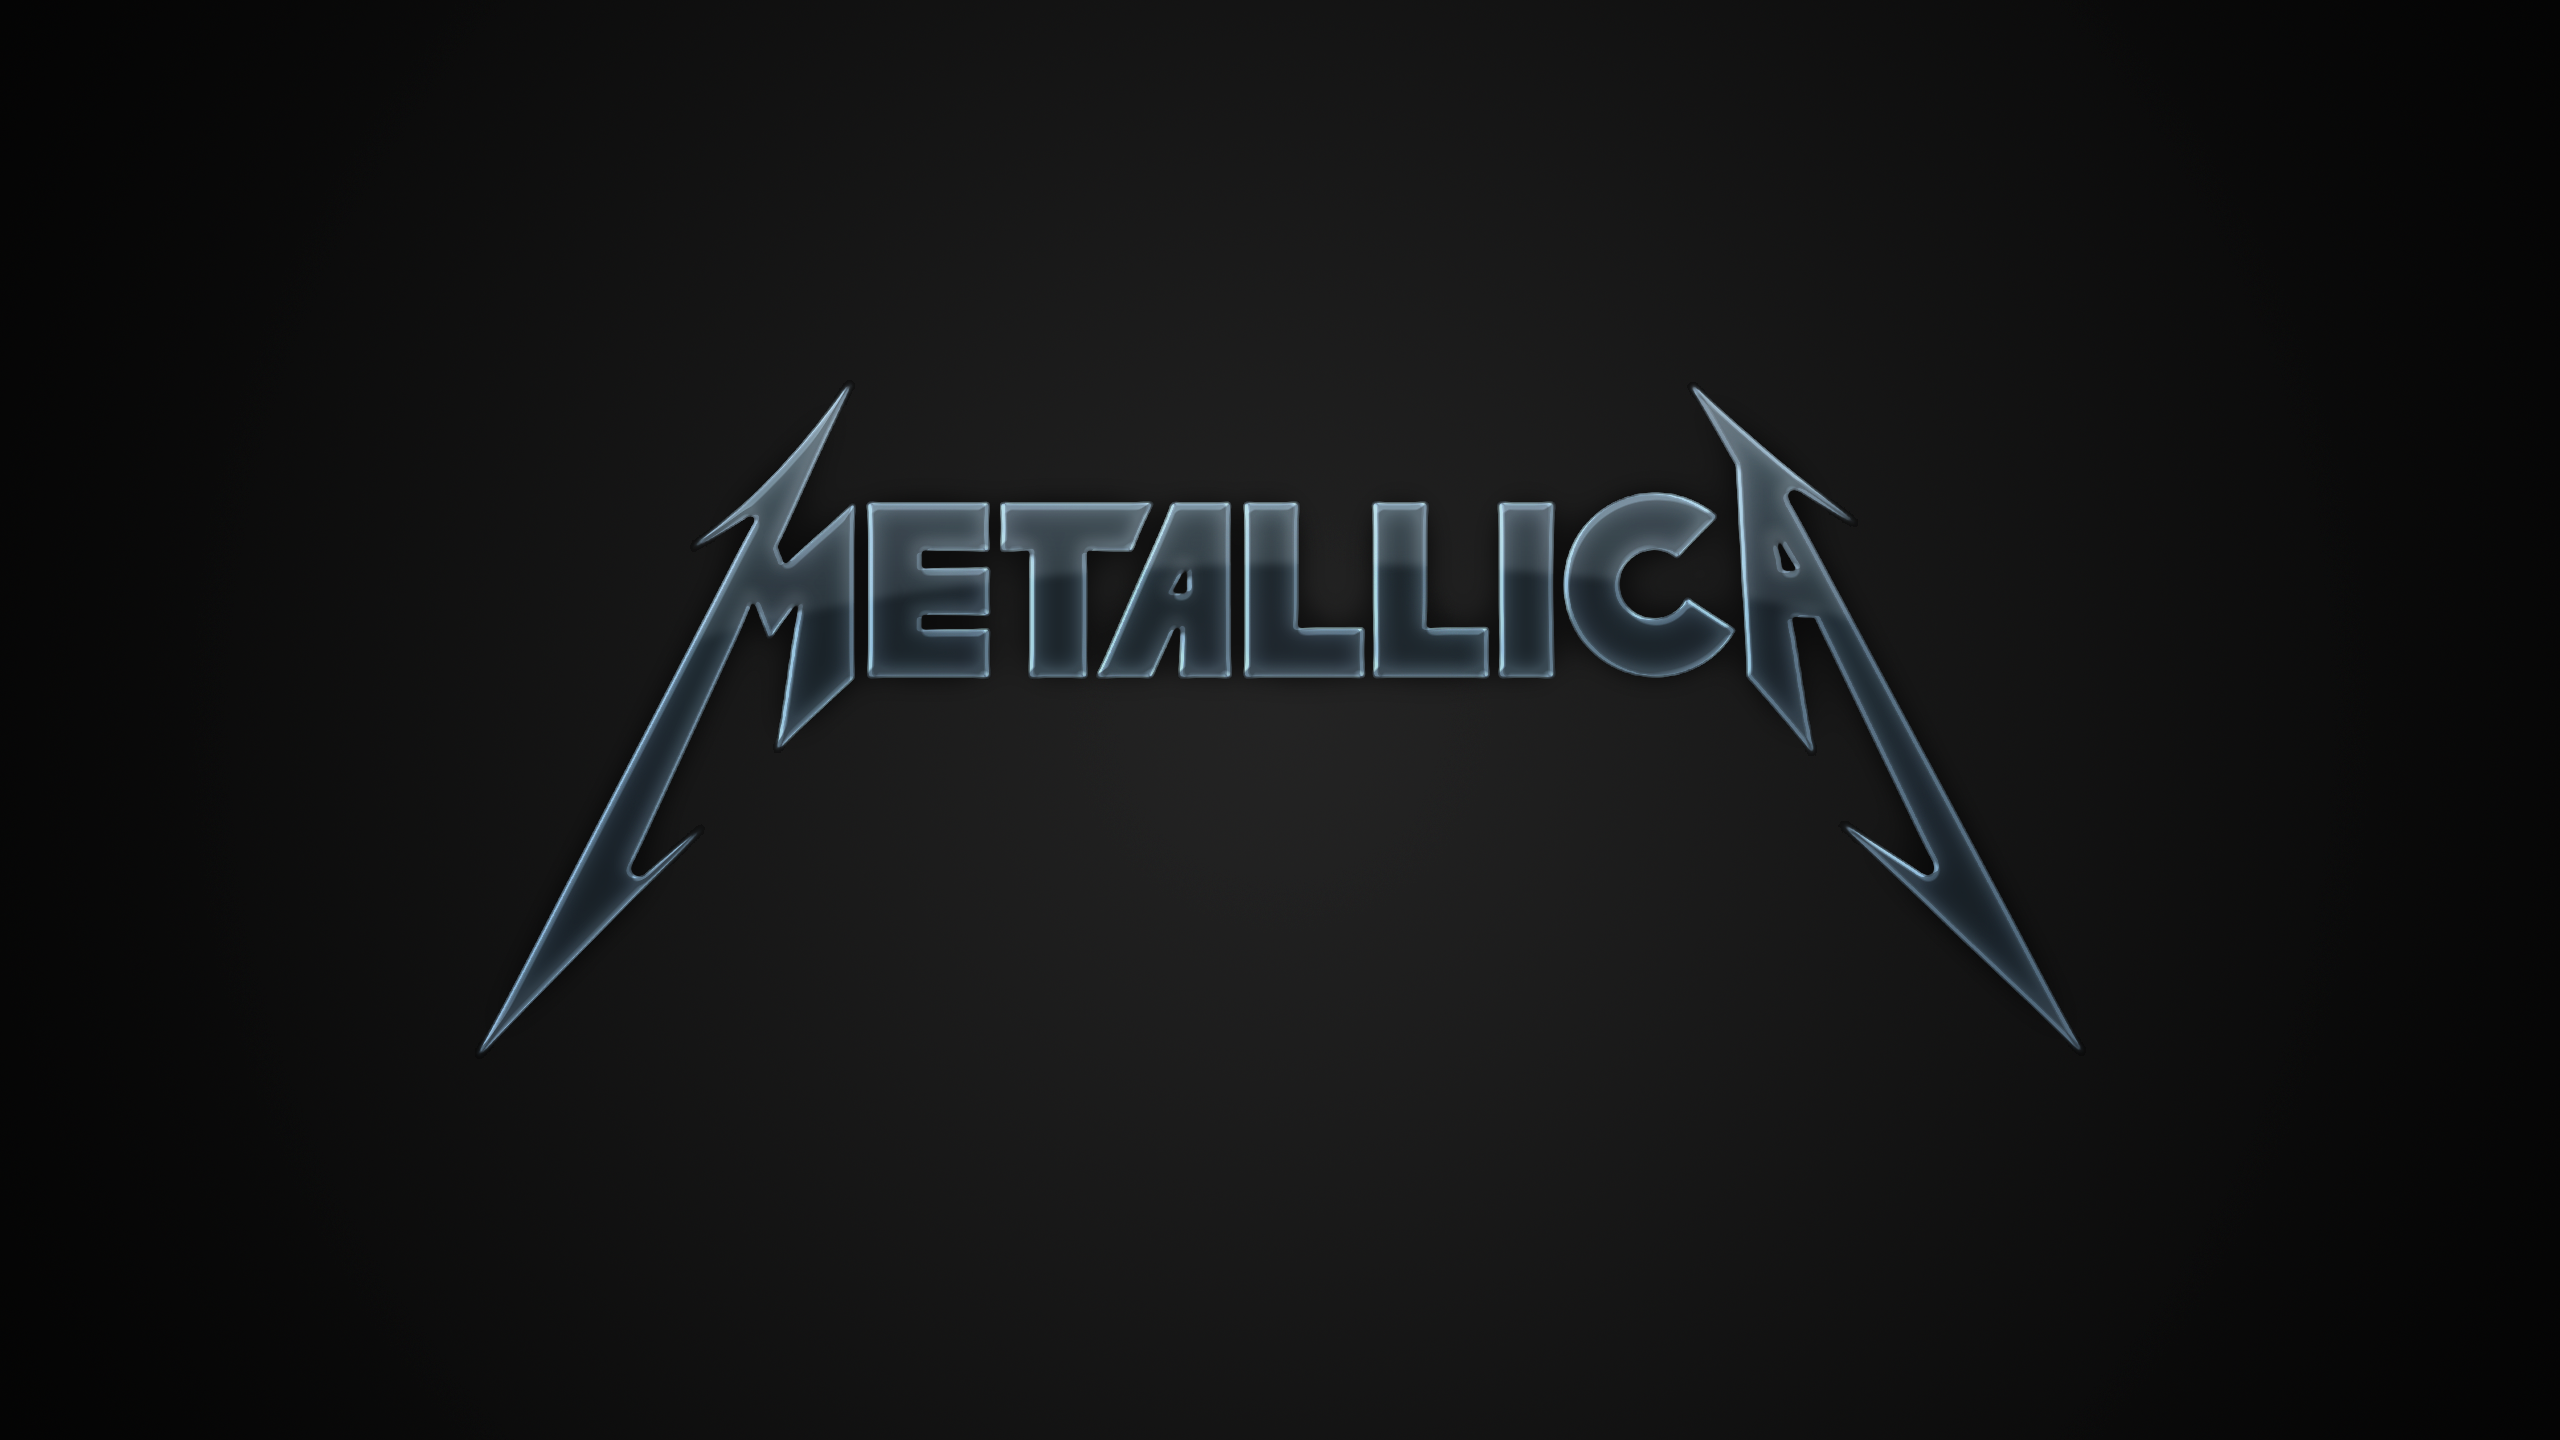 Metallica Wallpaper 1080p